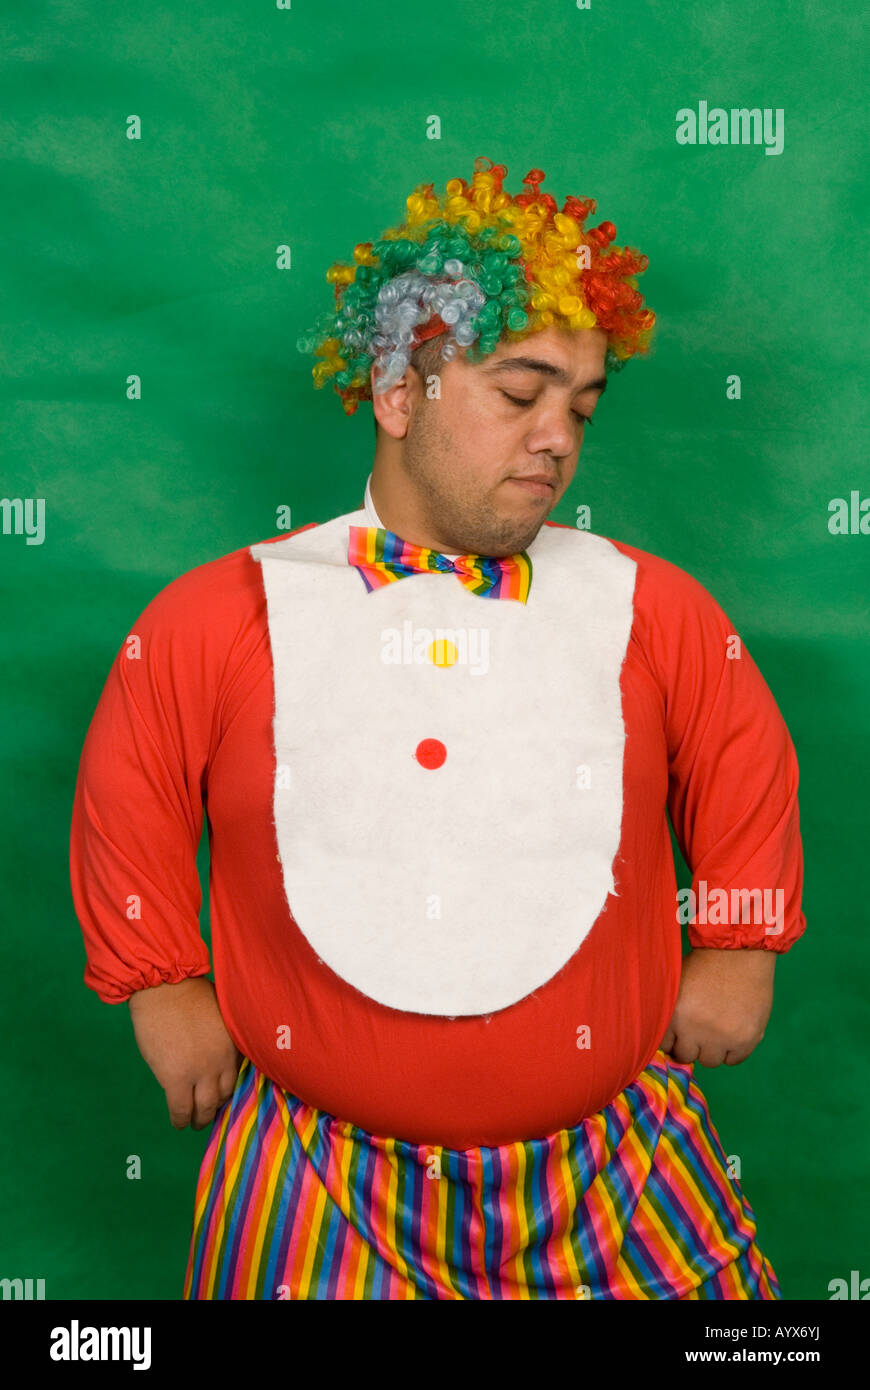 Portrait of a sad midget clown against a green background Stock Photo